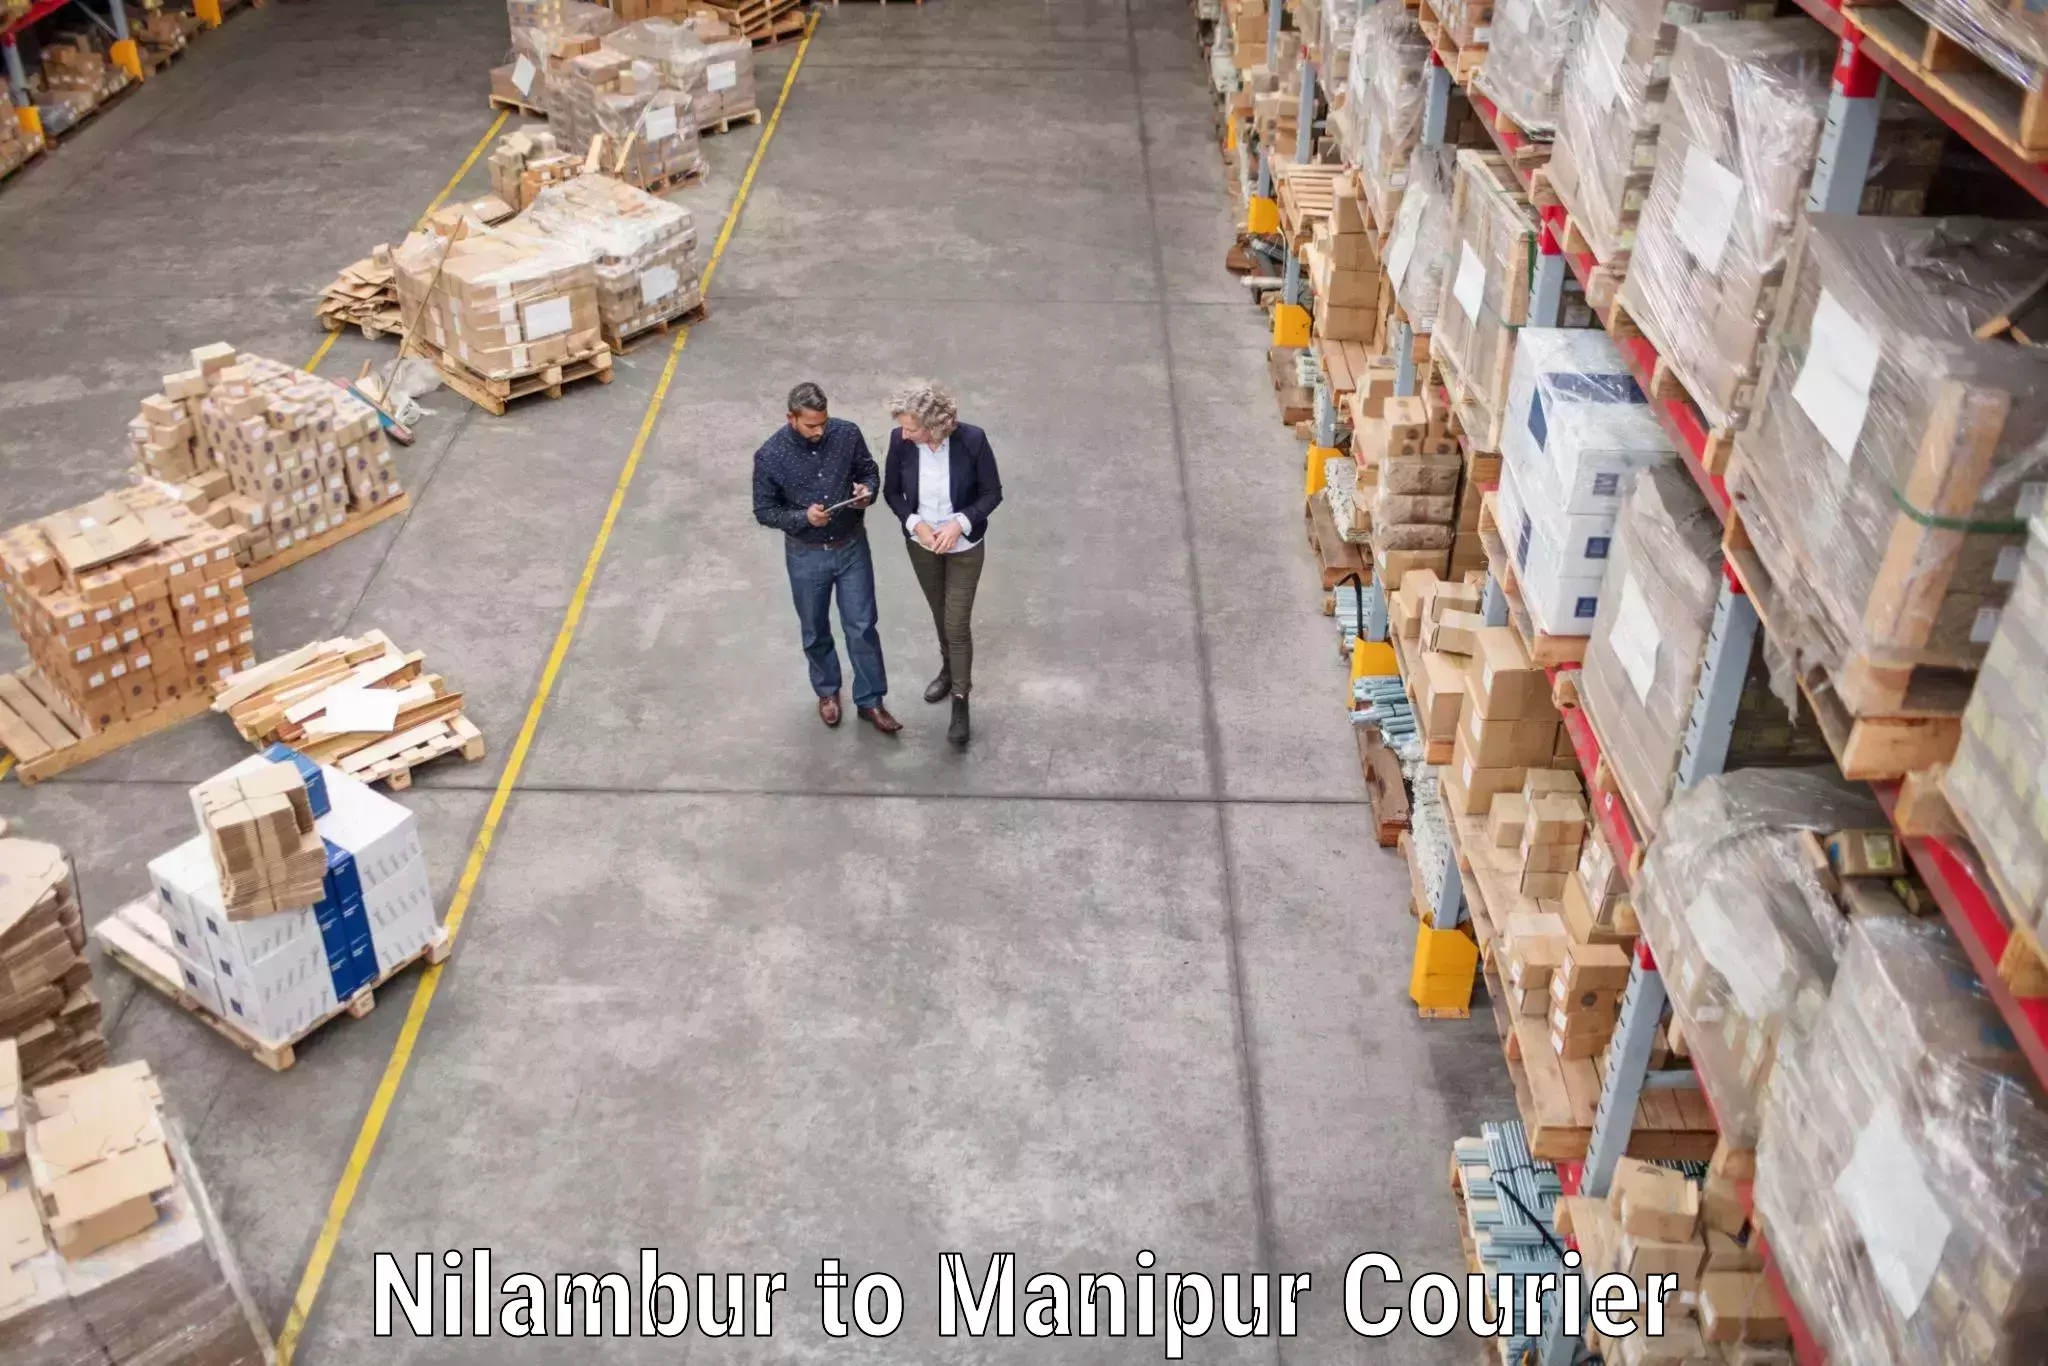 Furniture delivery service Nilambur to Manipur